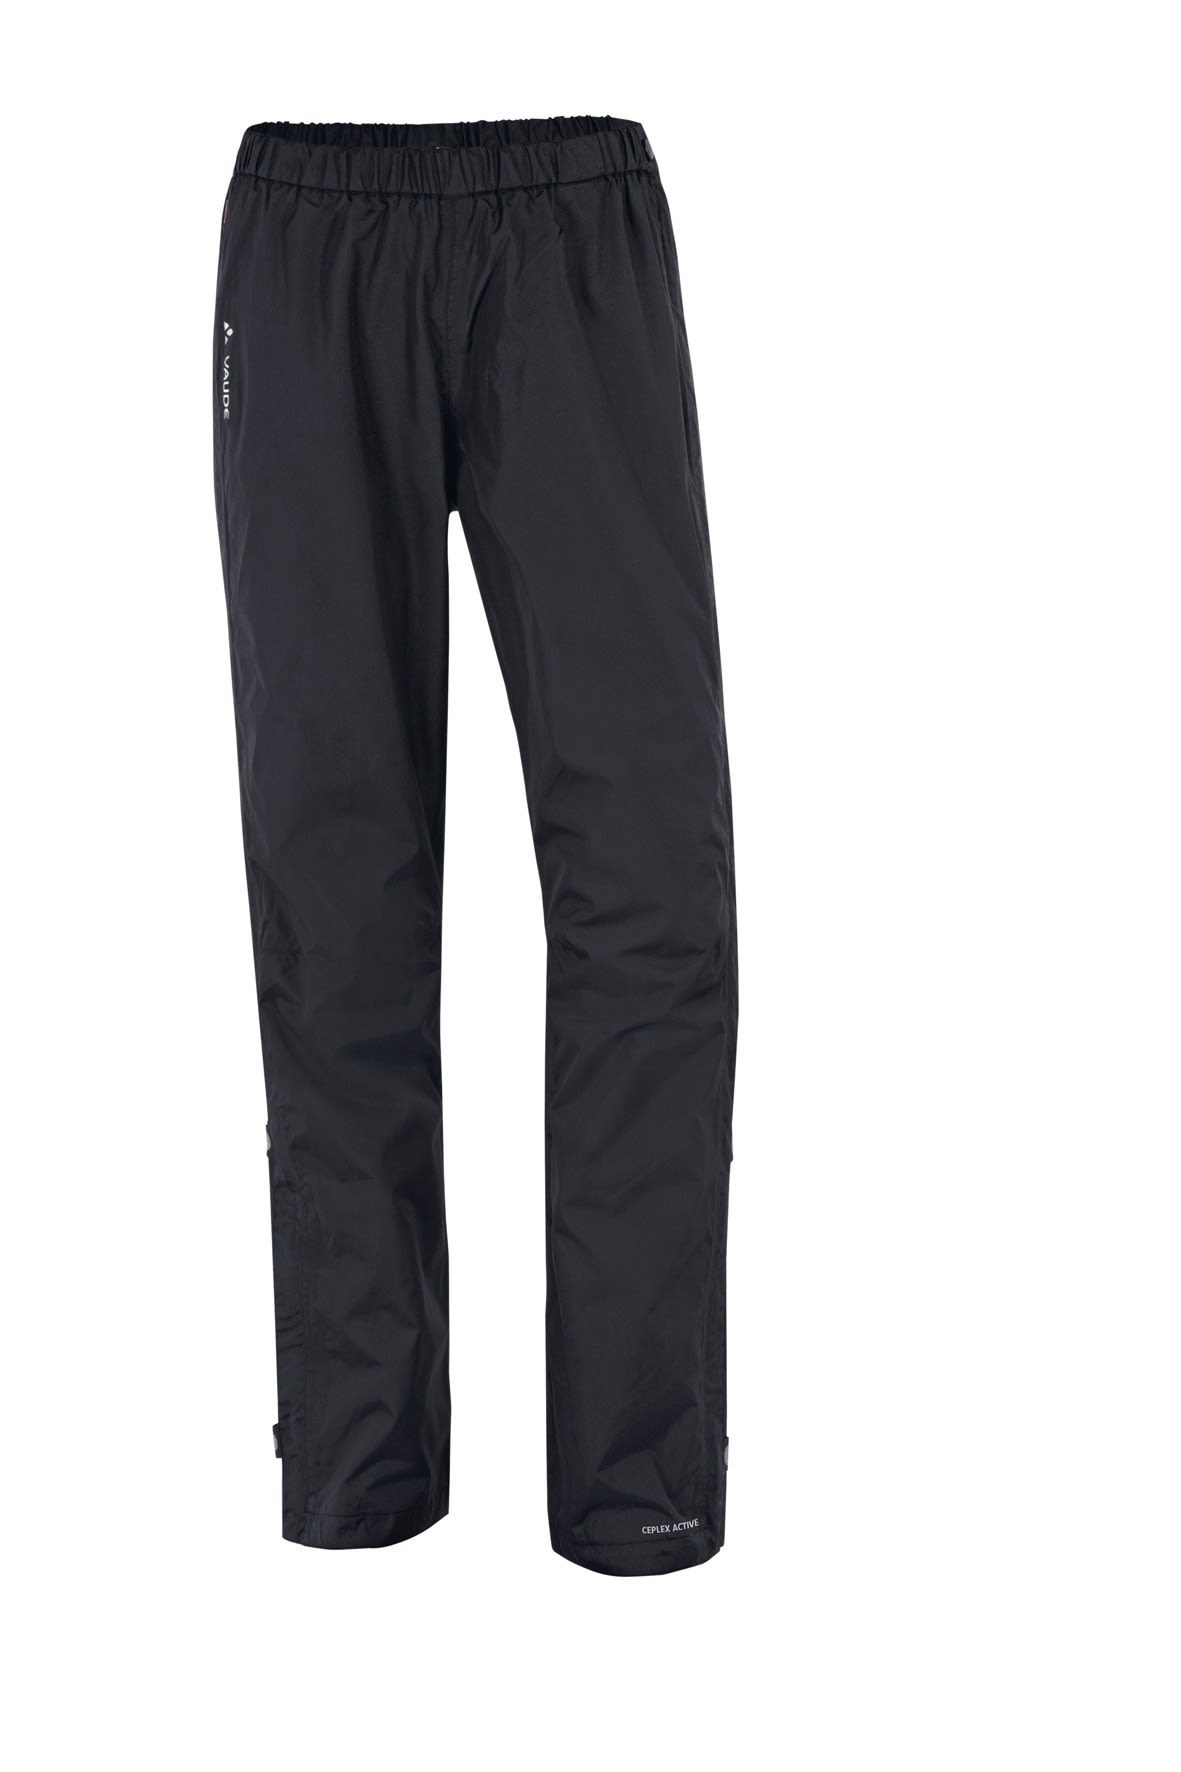 Vaude Fluid Full-Zip Pants Schwarz- Female Hosen- Grsse 44 - Farbe Black